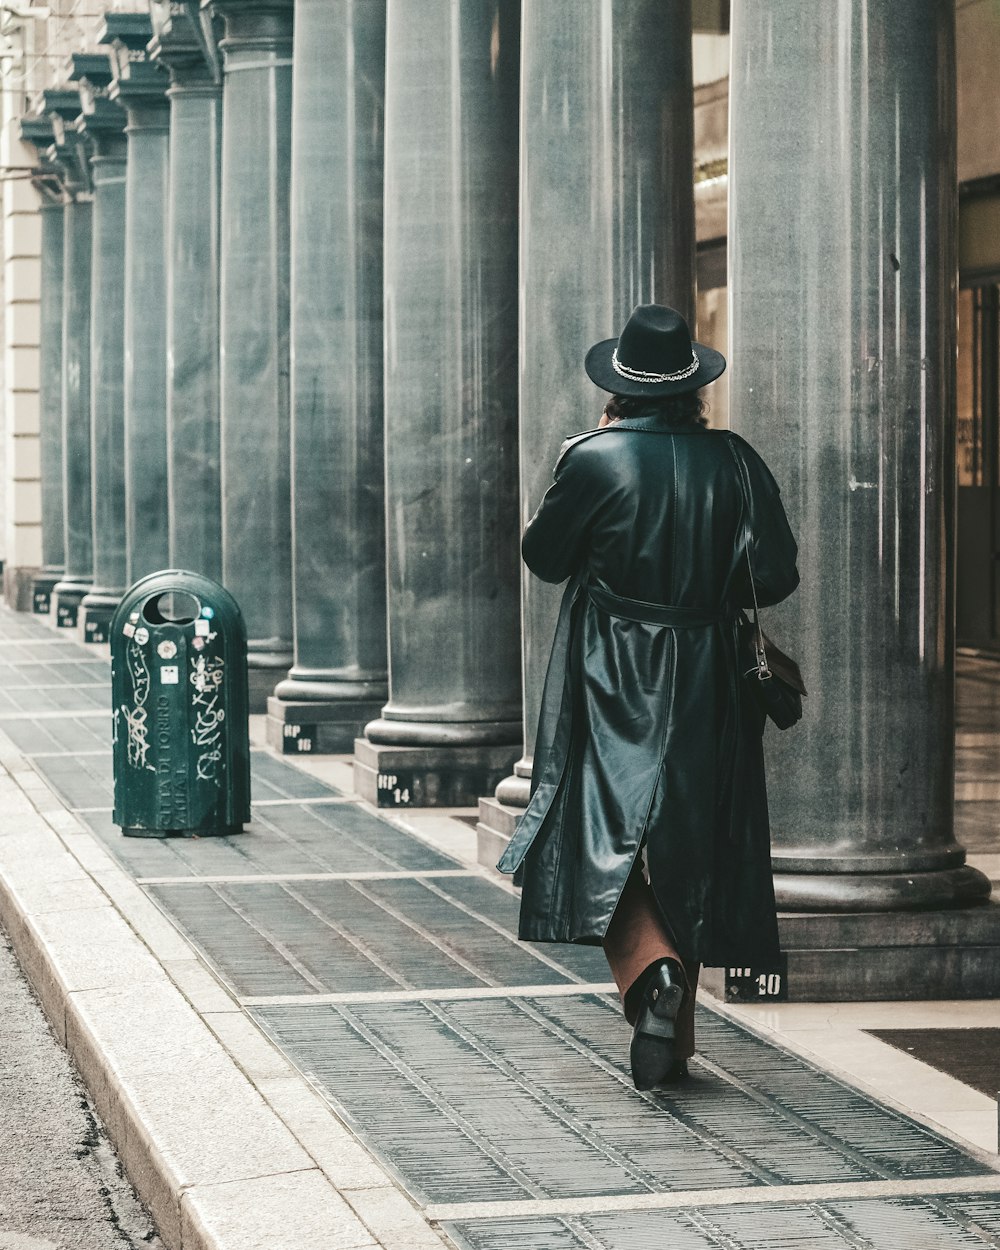 a woman walking down a street next to tall pillars